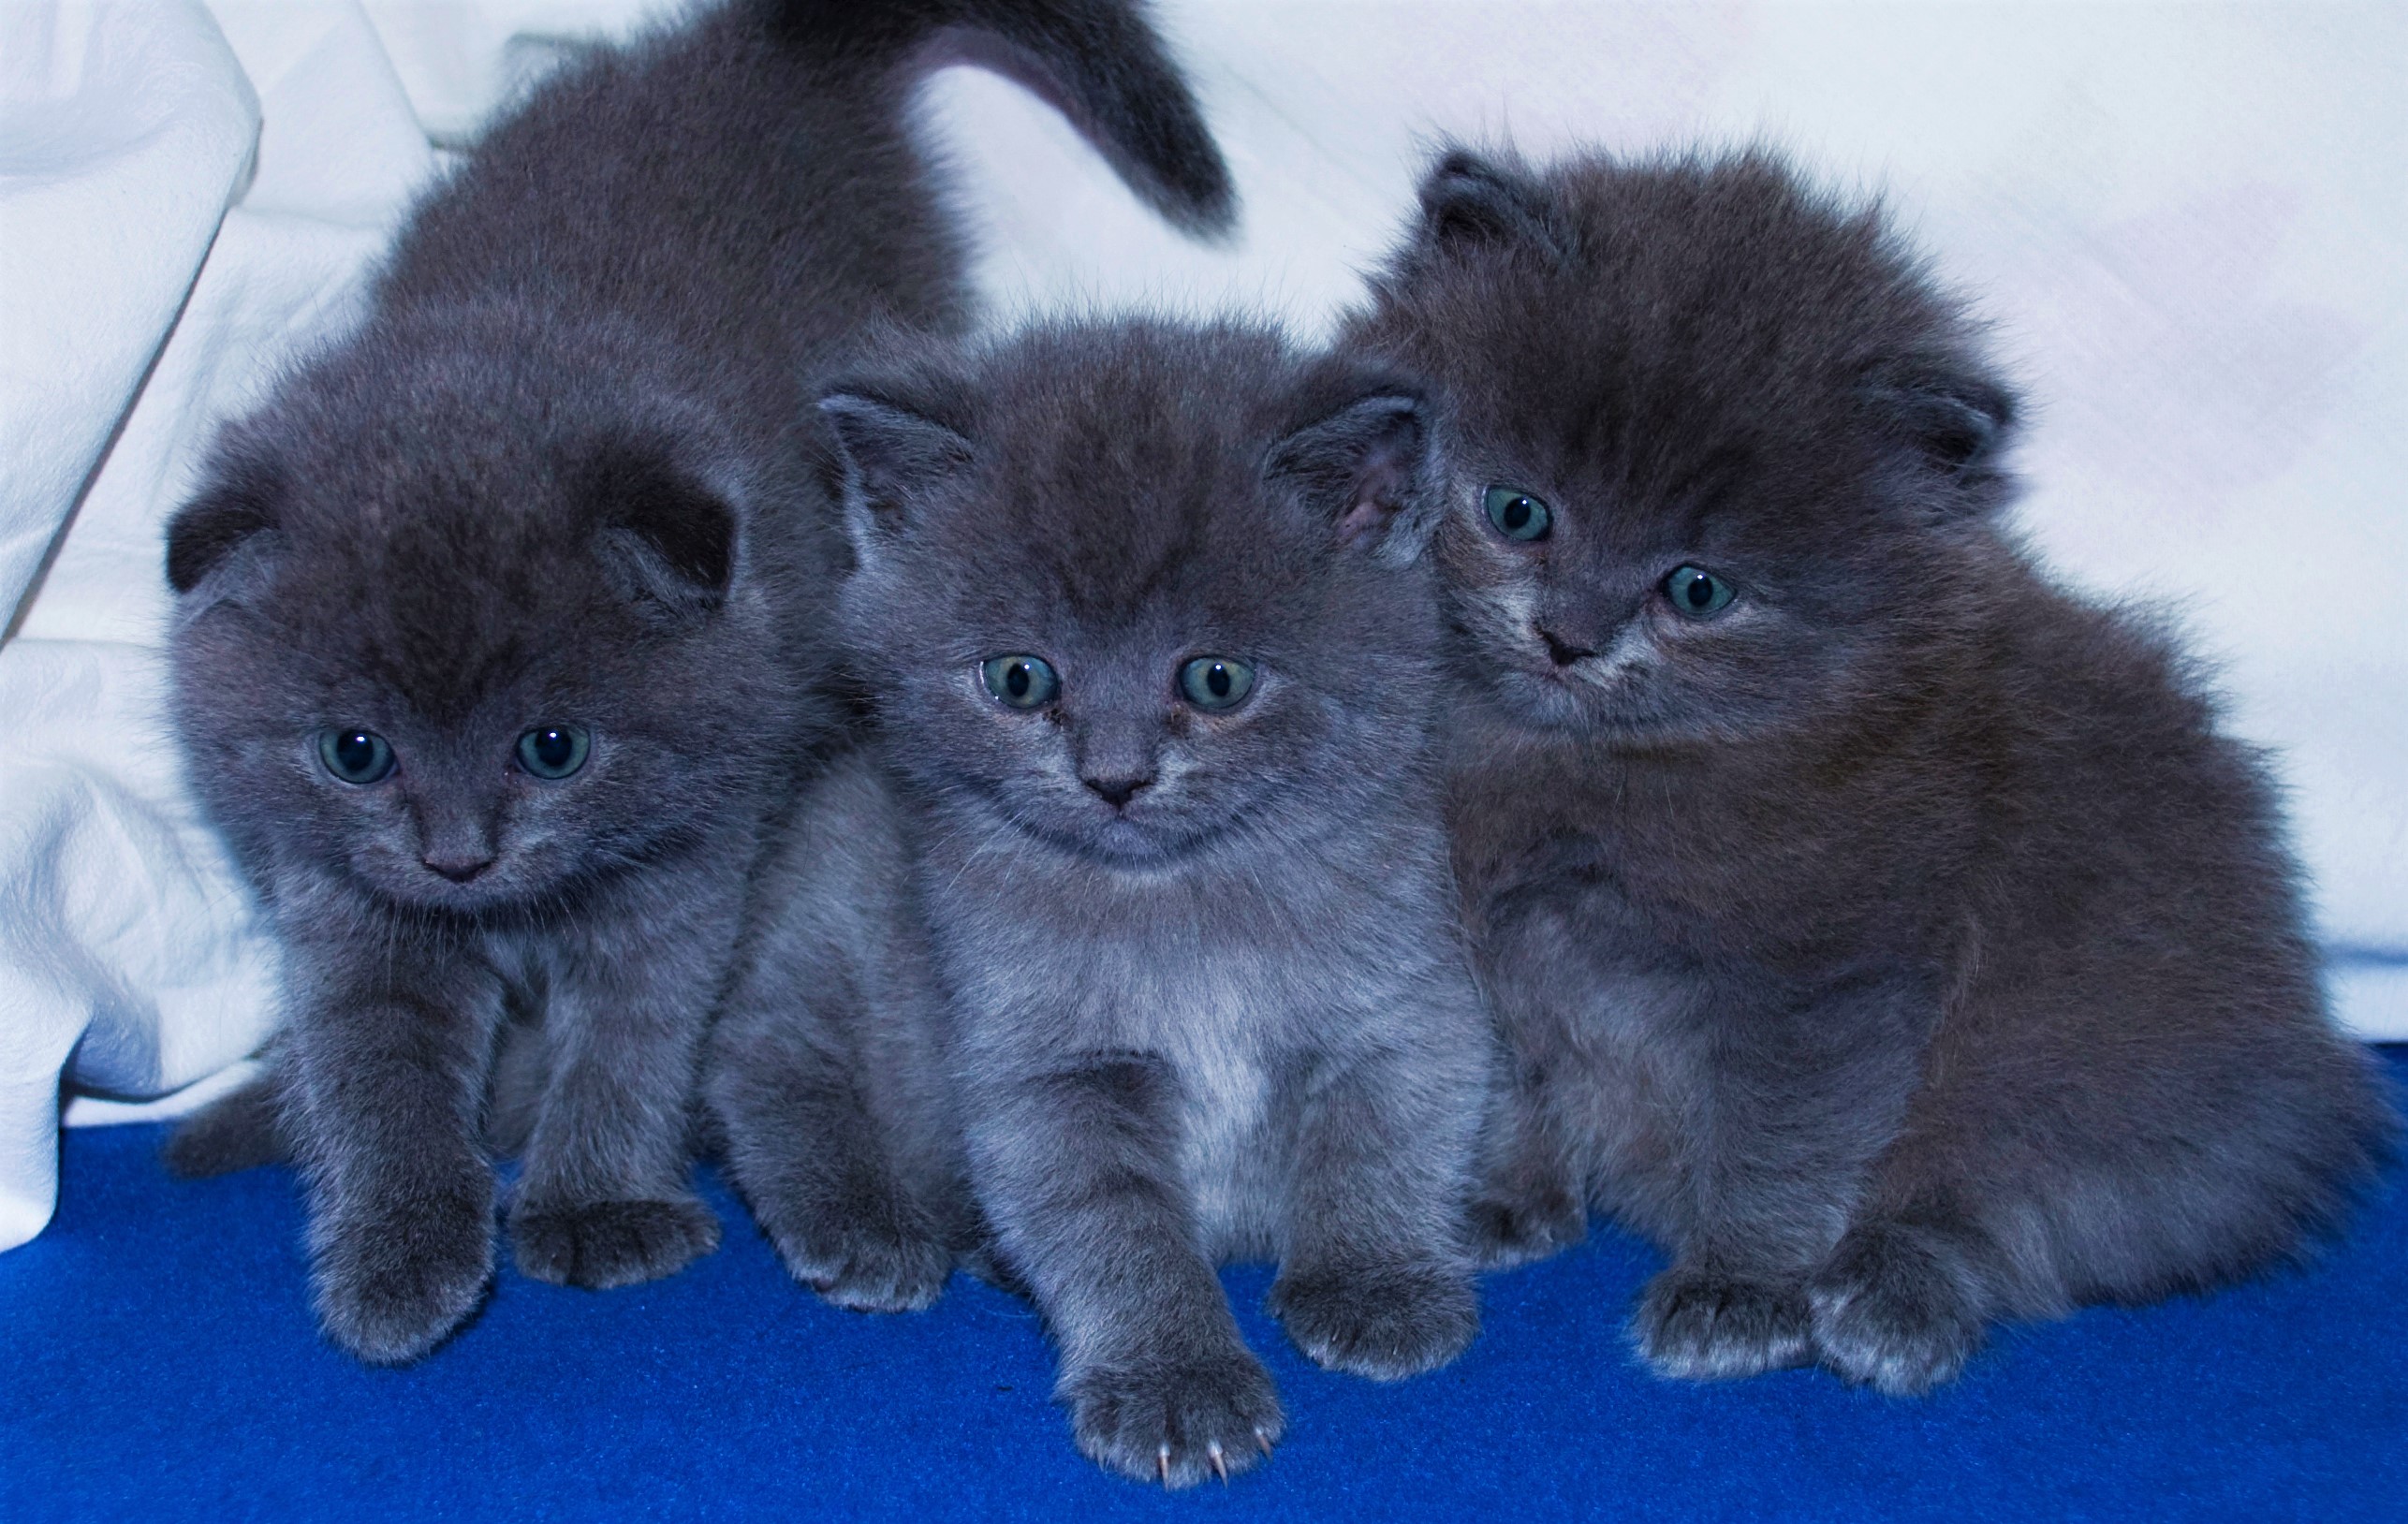 cute, animal, cat, baby animal, blue eyes, fluffy, kitten, cats